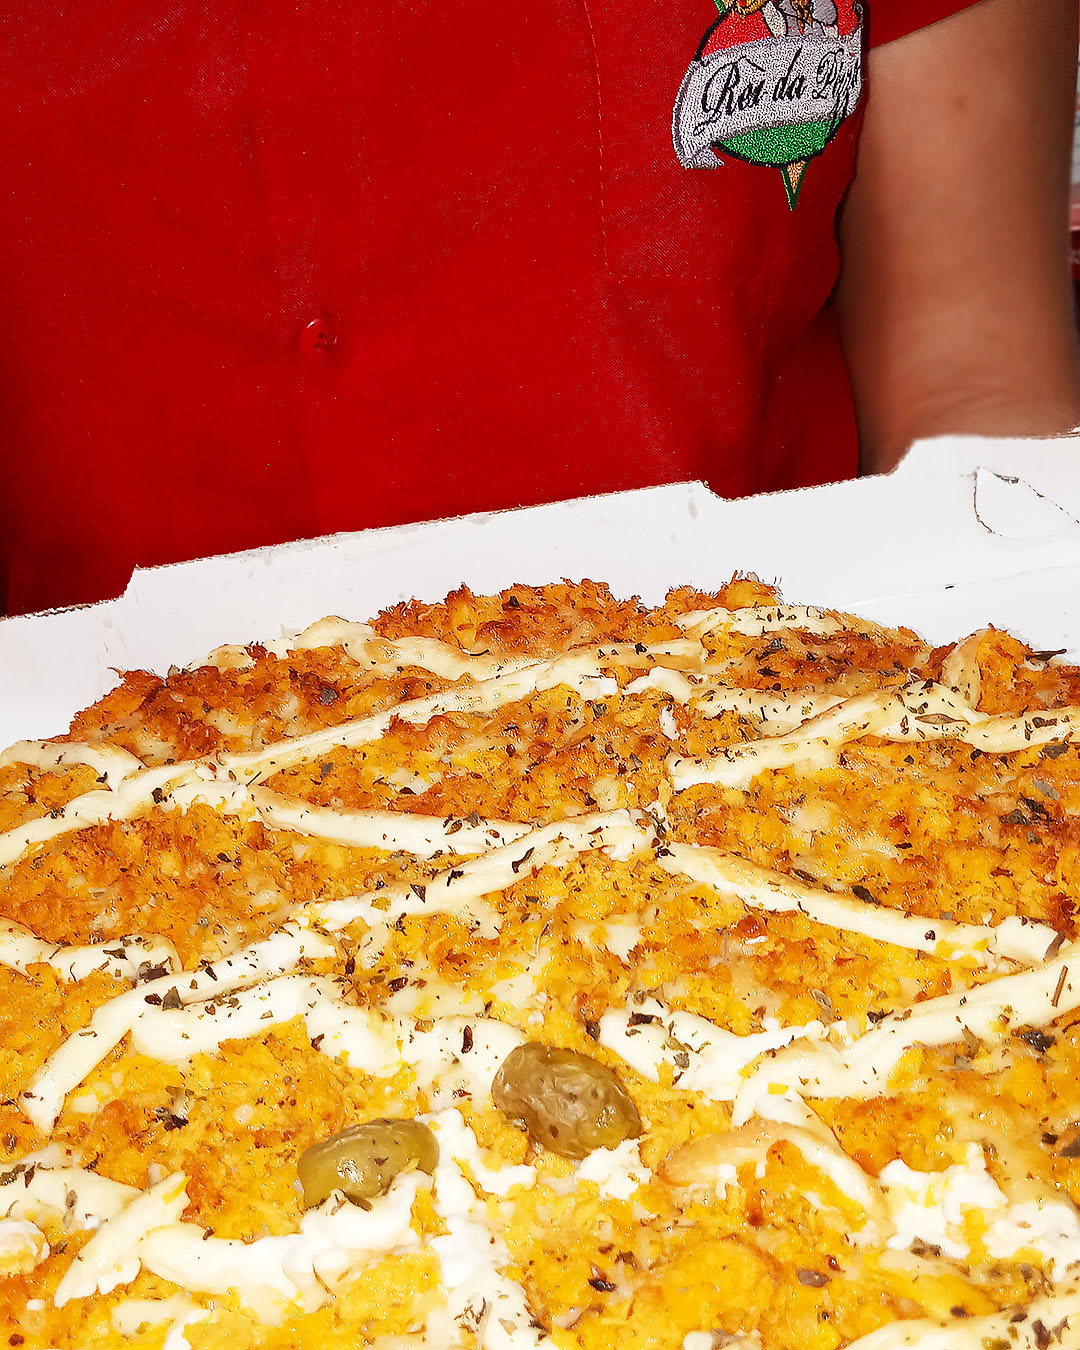 #sextou, dia de #pizza 🍕 da #reidapizzaczs